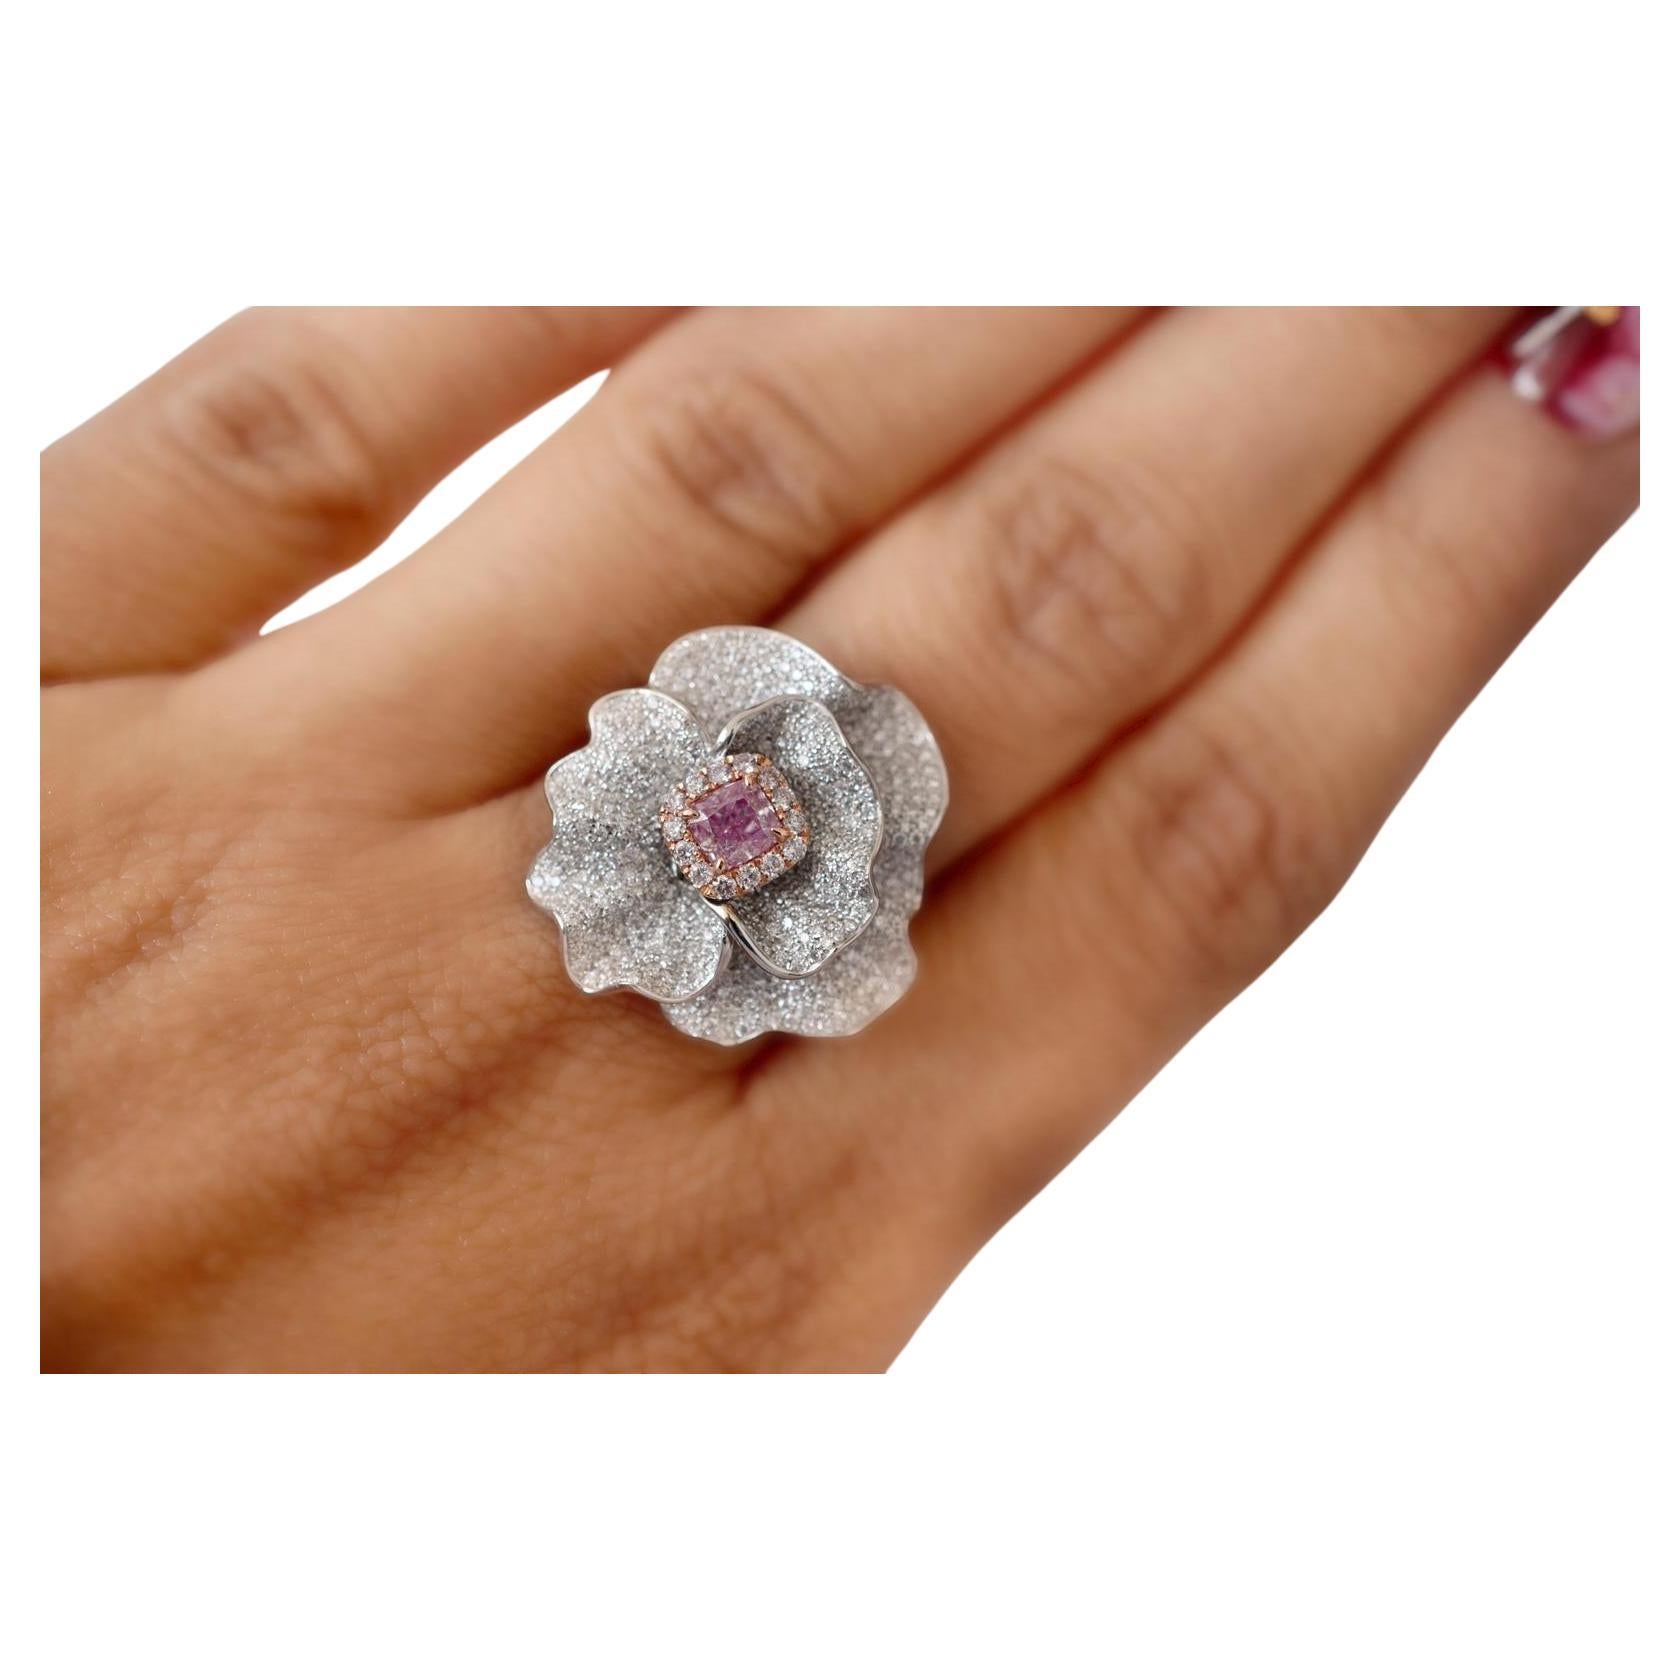 0.35 Carat Faint Pink Diamond Ring VS1 Clarity GIA Certified 